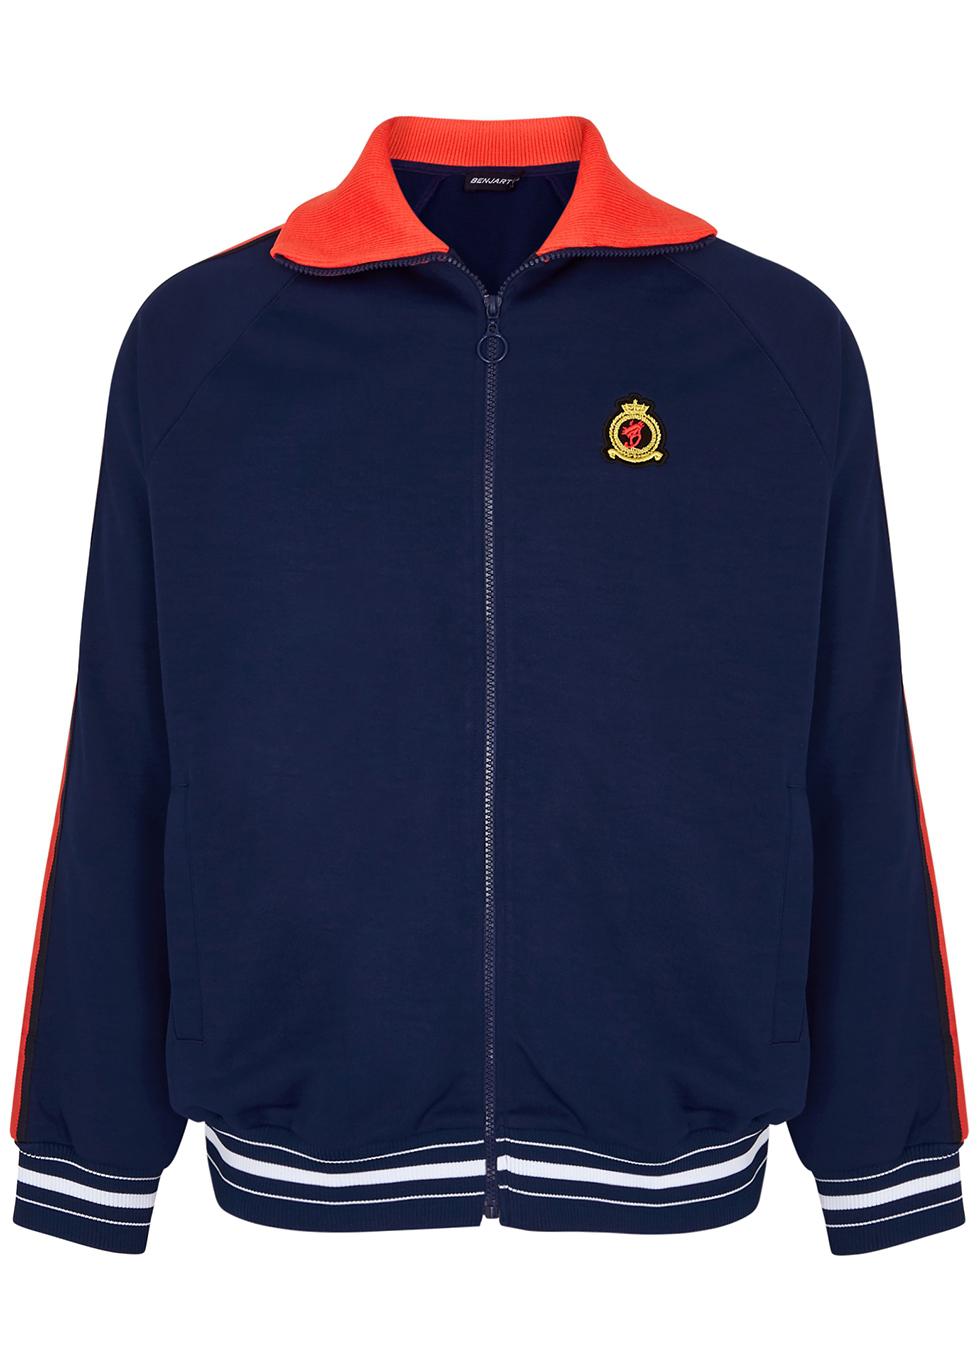 Navy logo jersey track jacket by BENJART